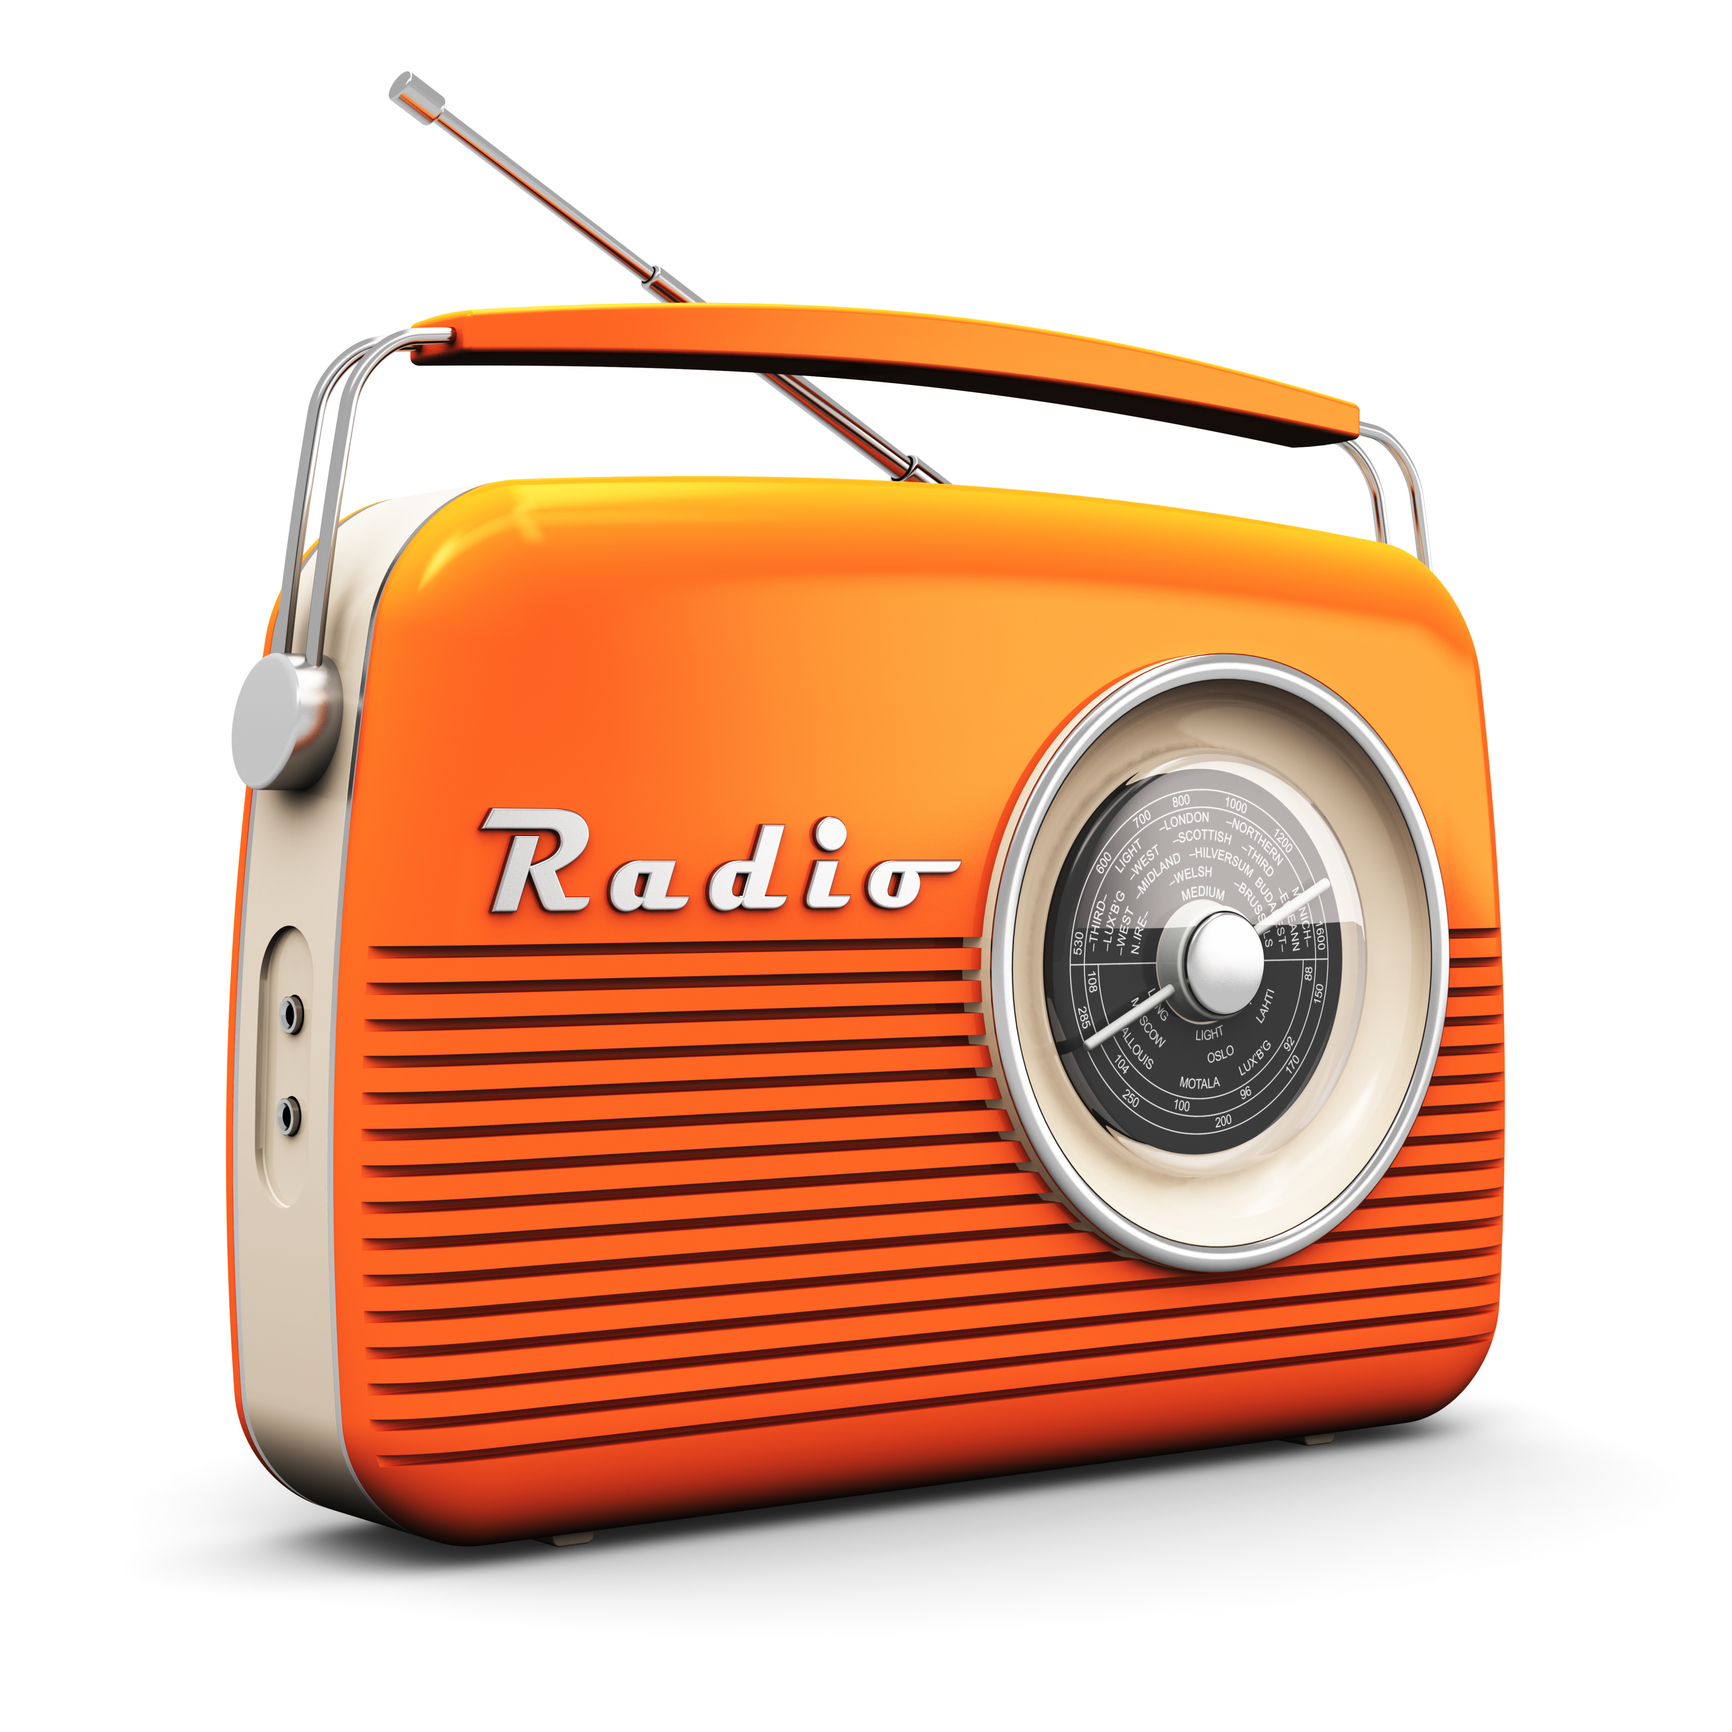 Radio marketing campaign mocks streaming services' reach - Mumbrella